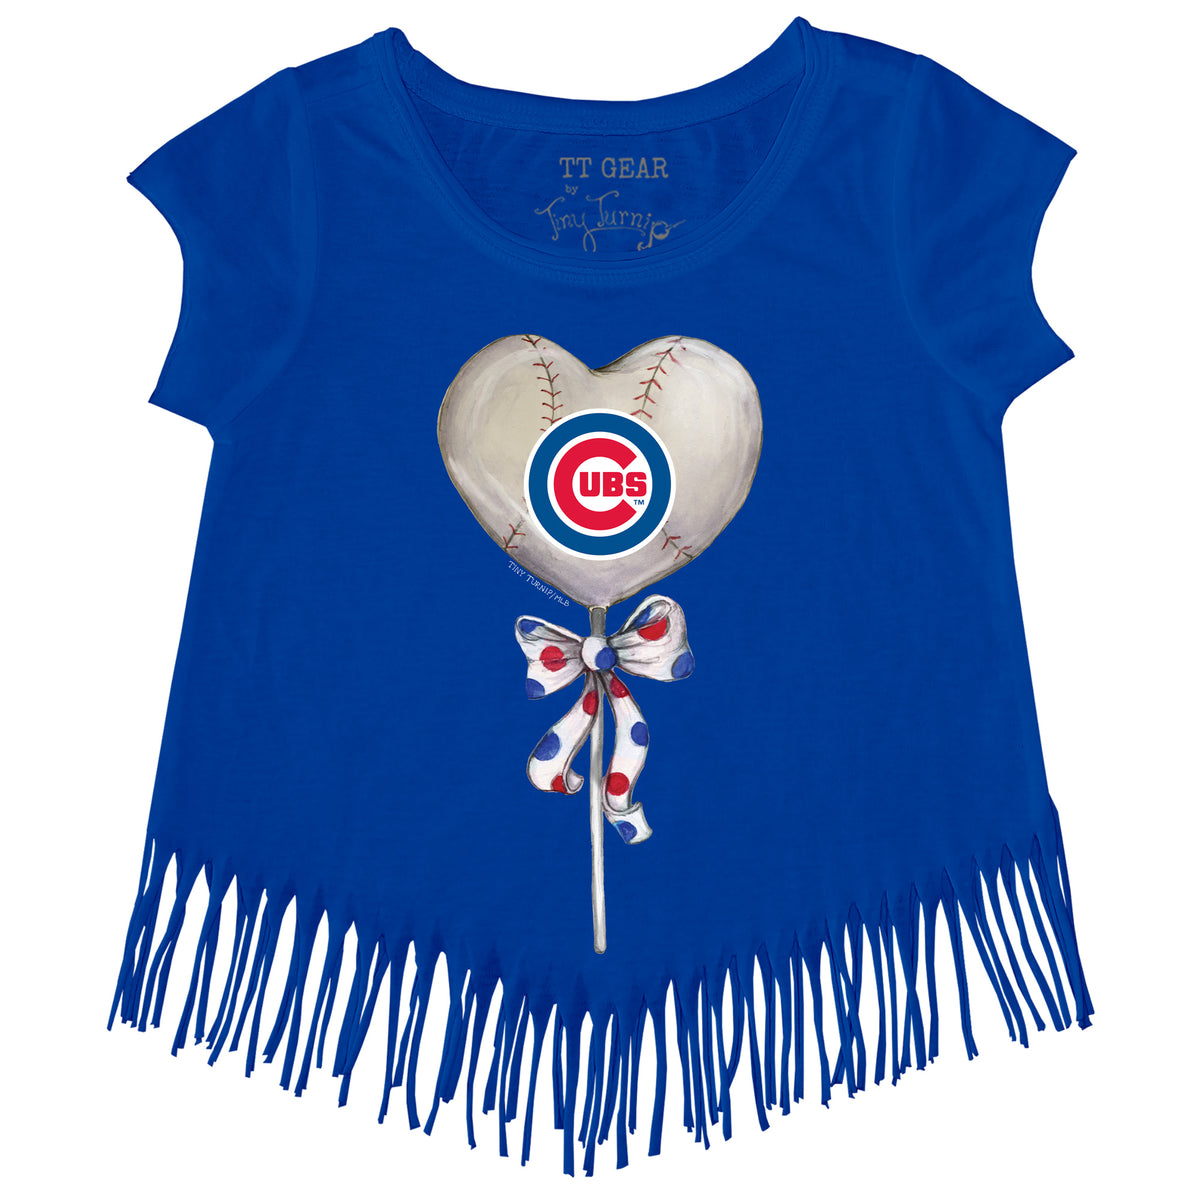 MLB Women's Short-Sleeve T-Shirt - Chicago Cubs